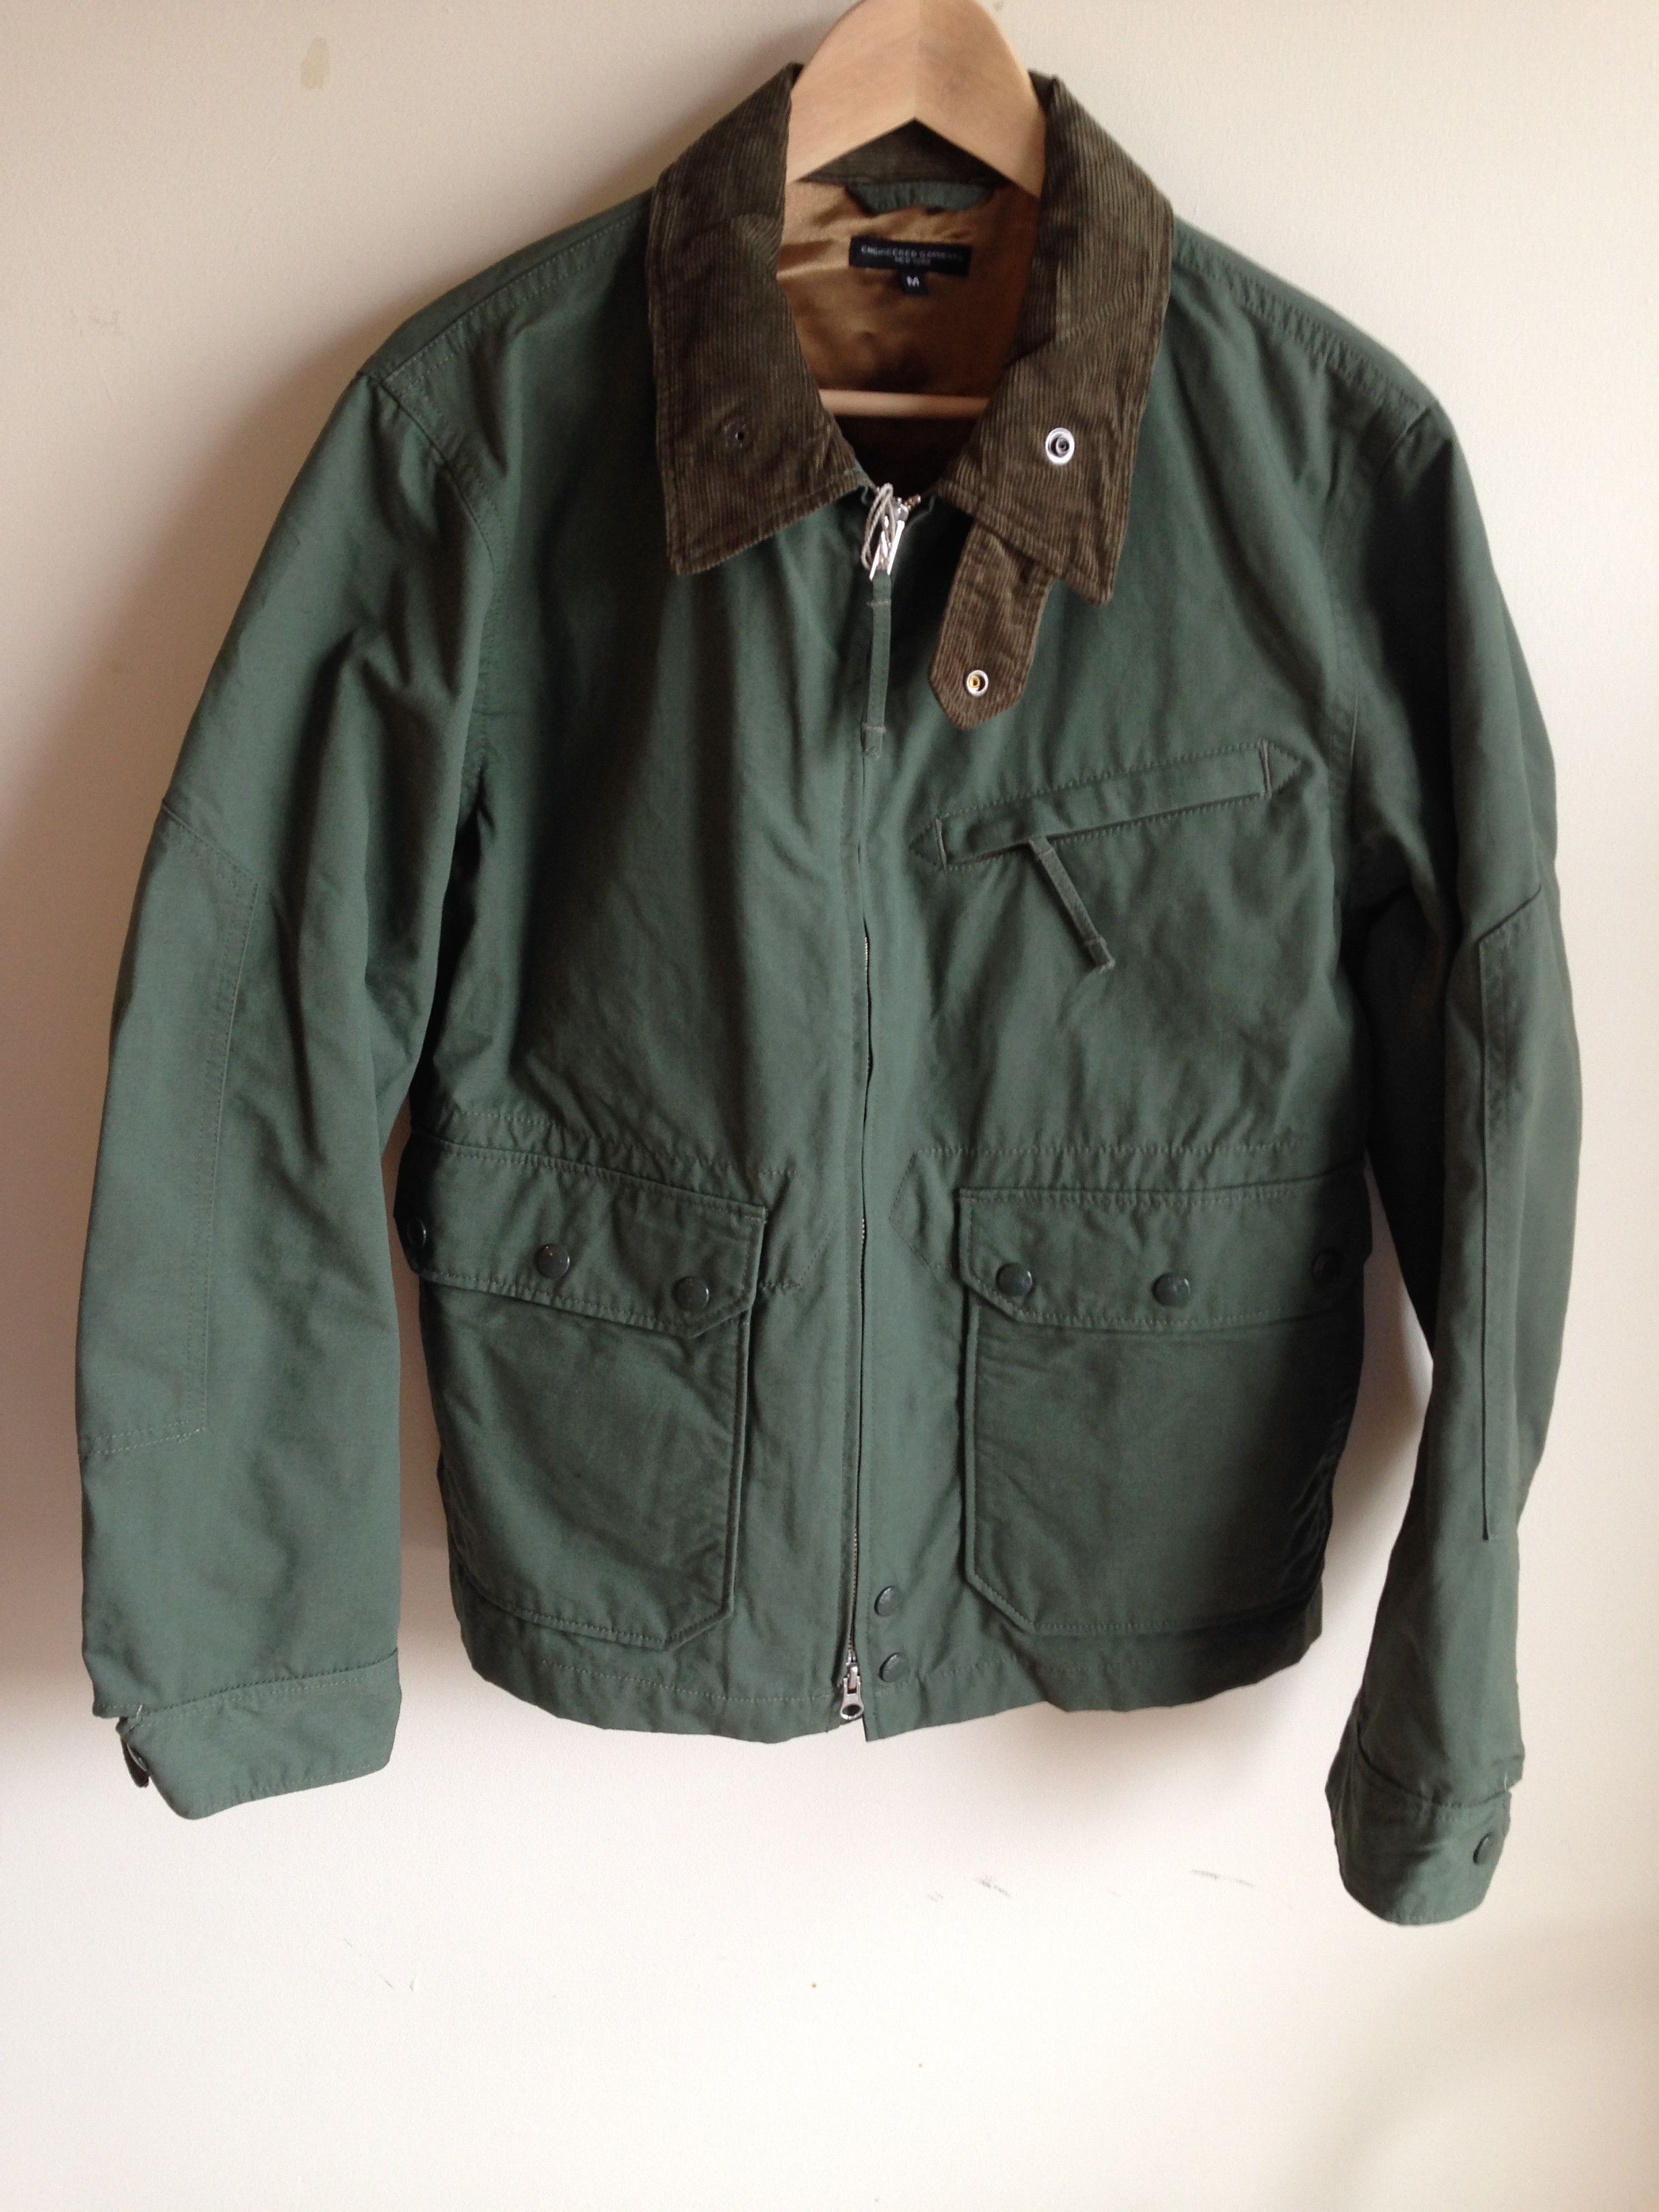 Engineered Garments Pathfinder Jacket in Olive Green | Grailed